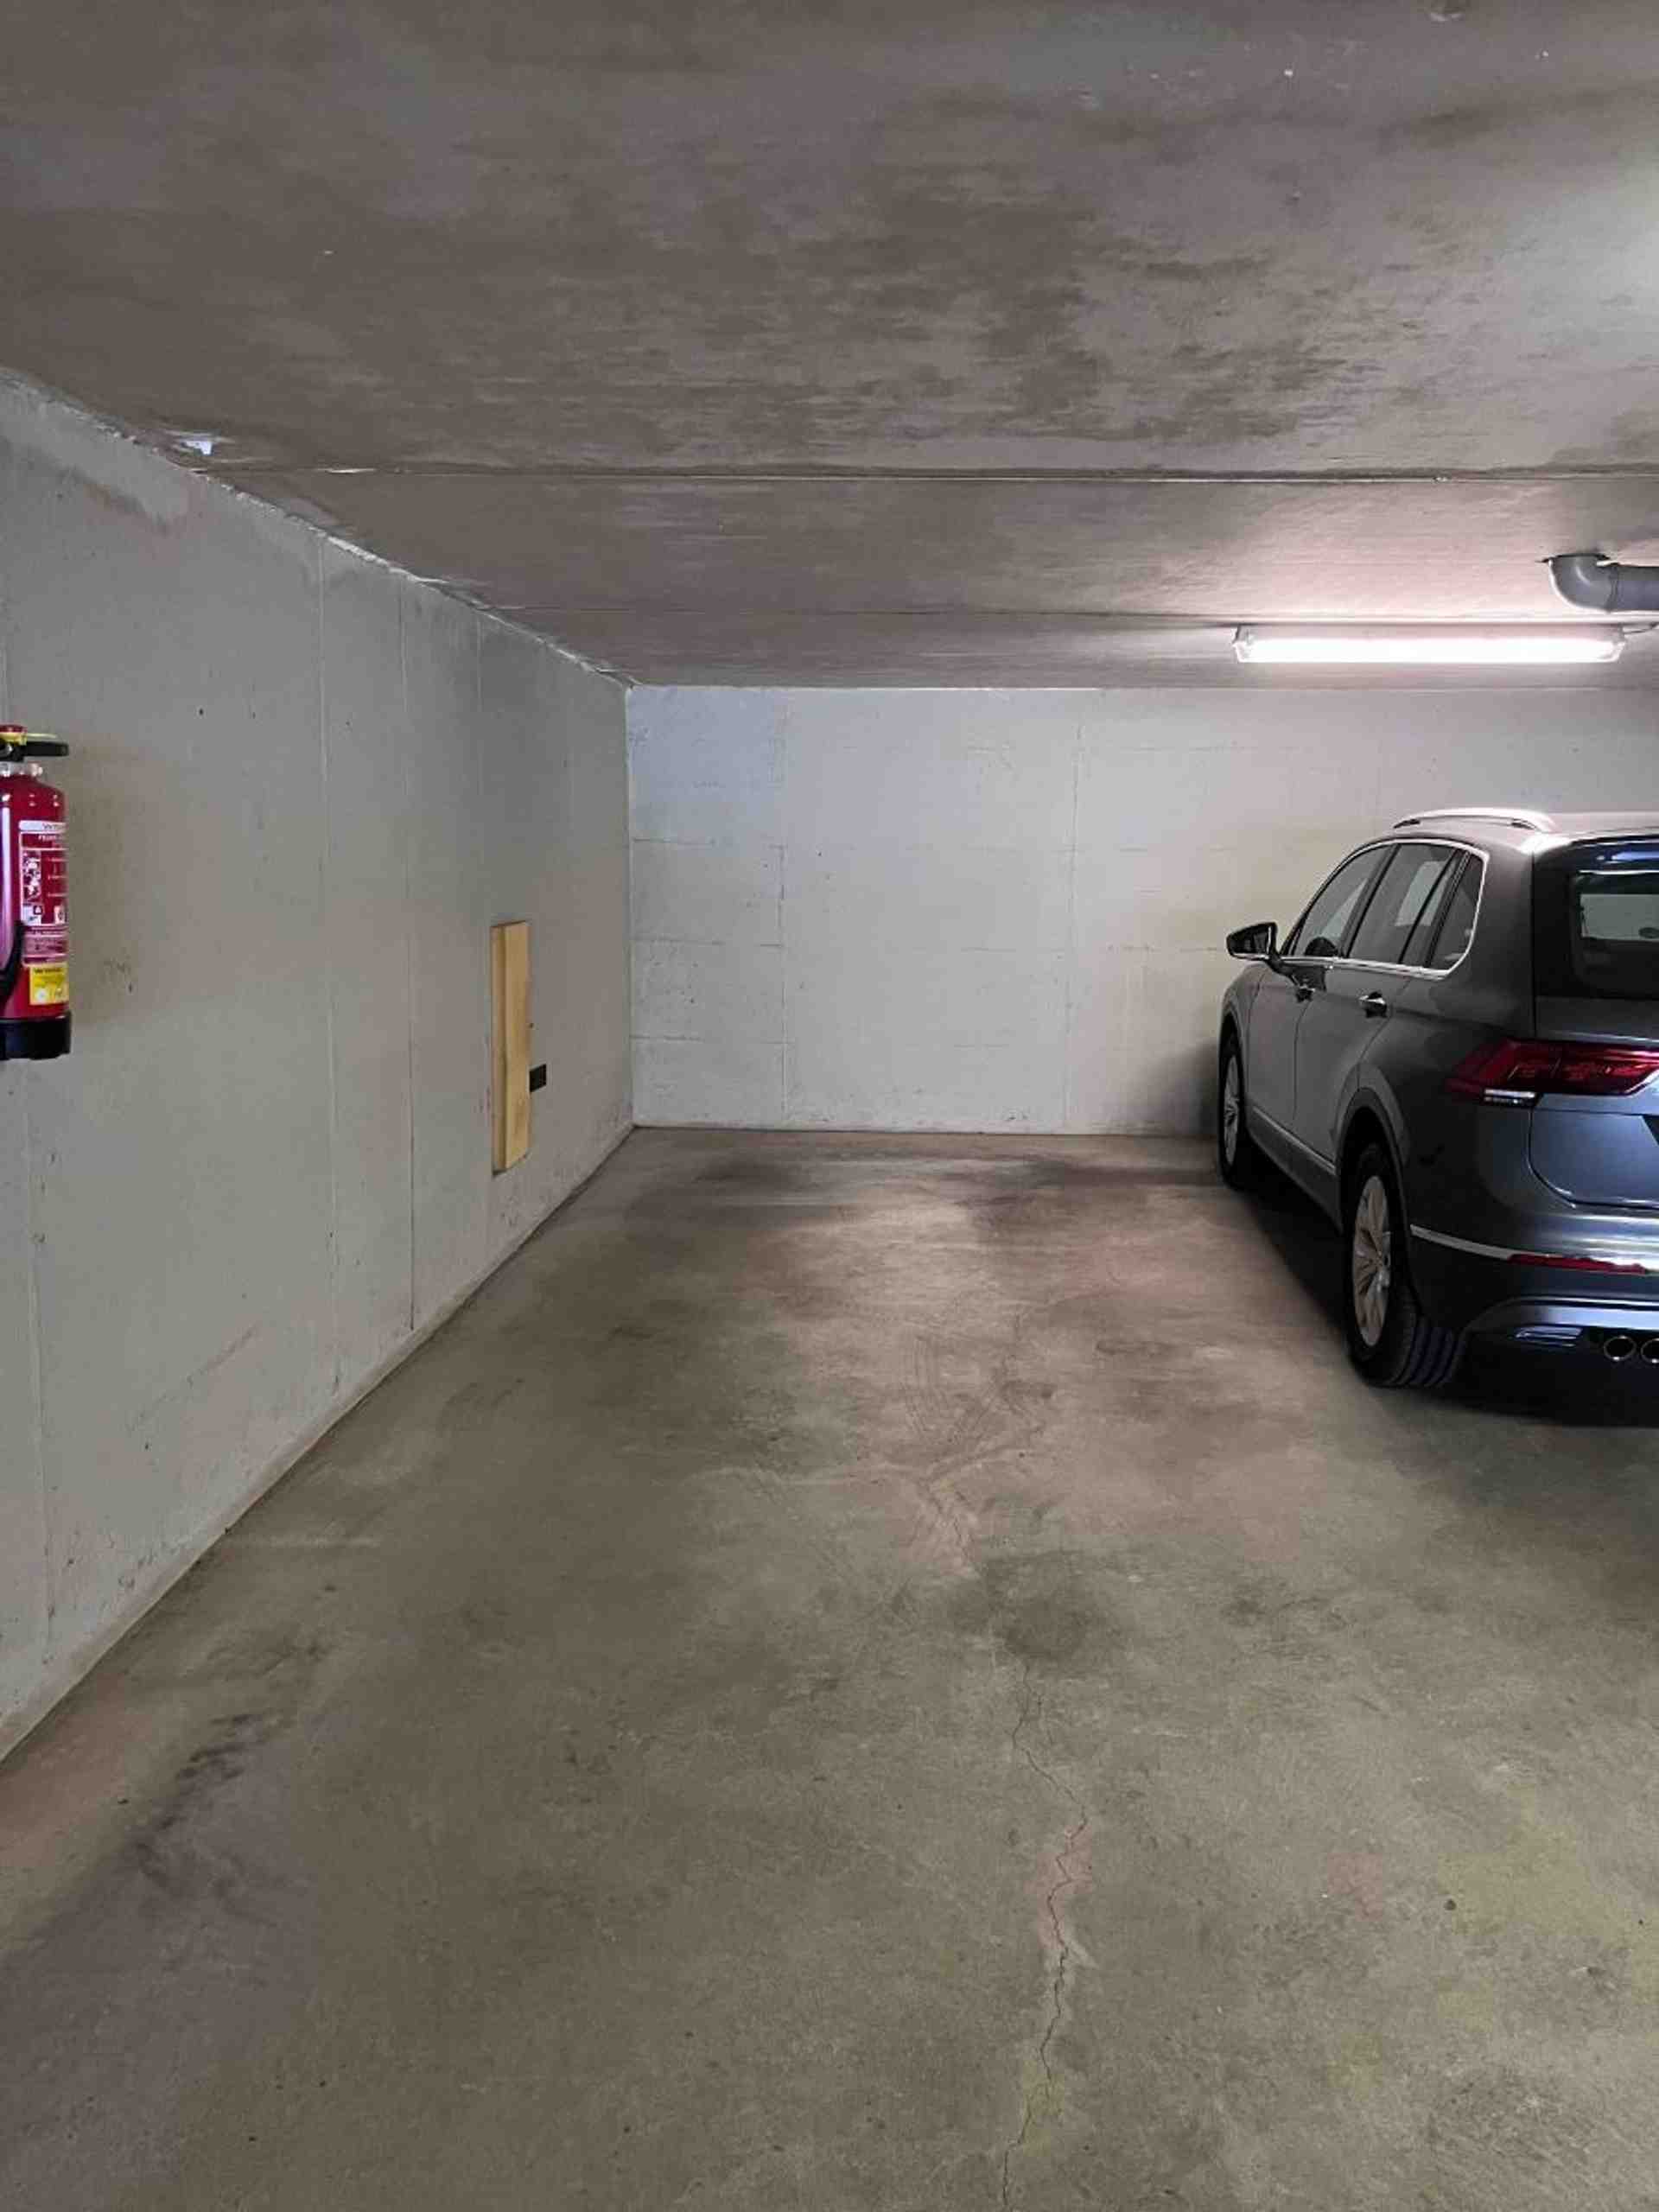 Car Parking Space - Turiner Straße, 60598 Frankfurt nad Mohanom - Fotka 2 z 3